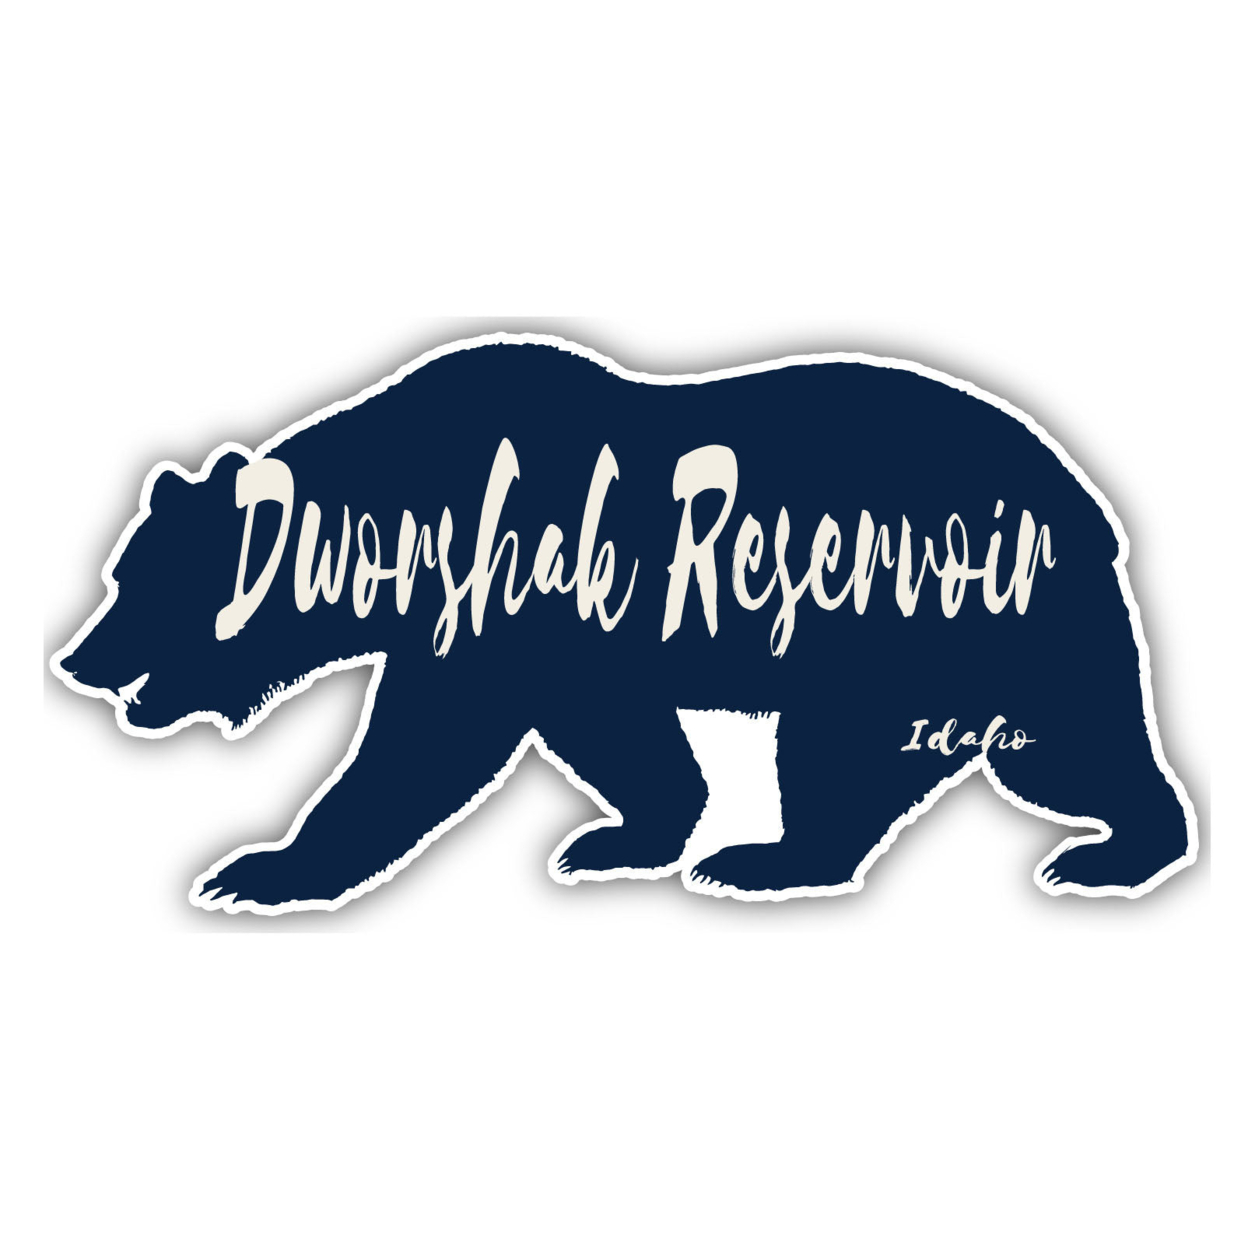 Dworshak Reservoir Idaho Souvenir Decorative Stickers (Choose Theme And Size) - Single Unit, 10-Inch, Camp Life